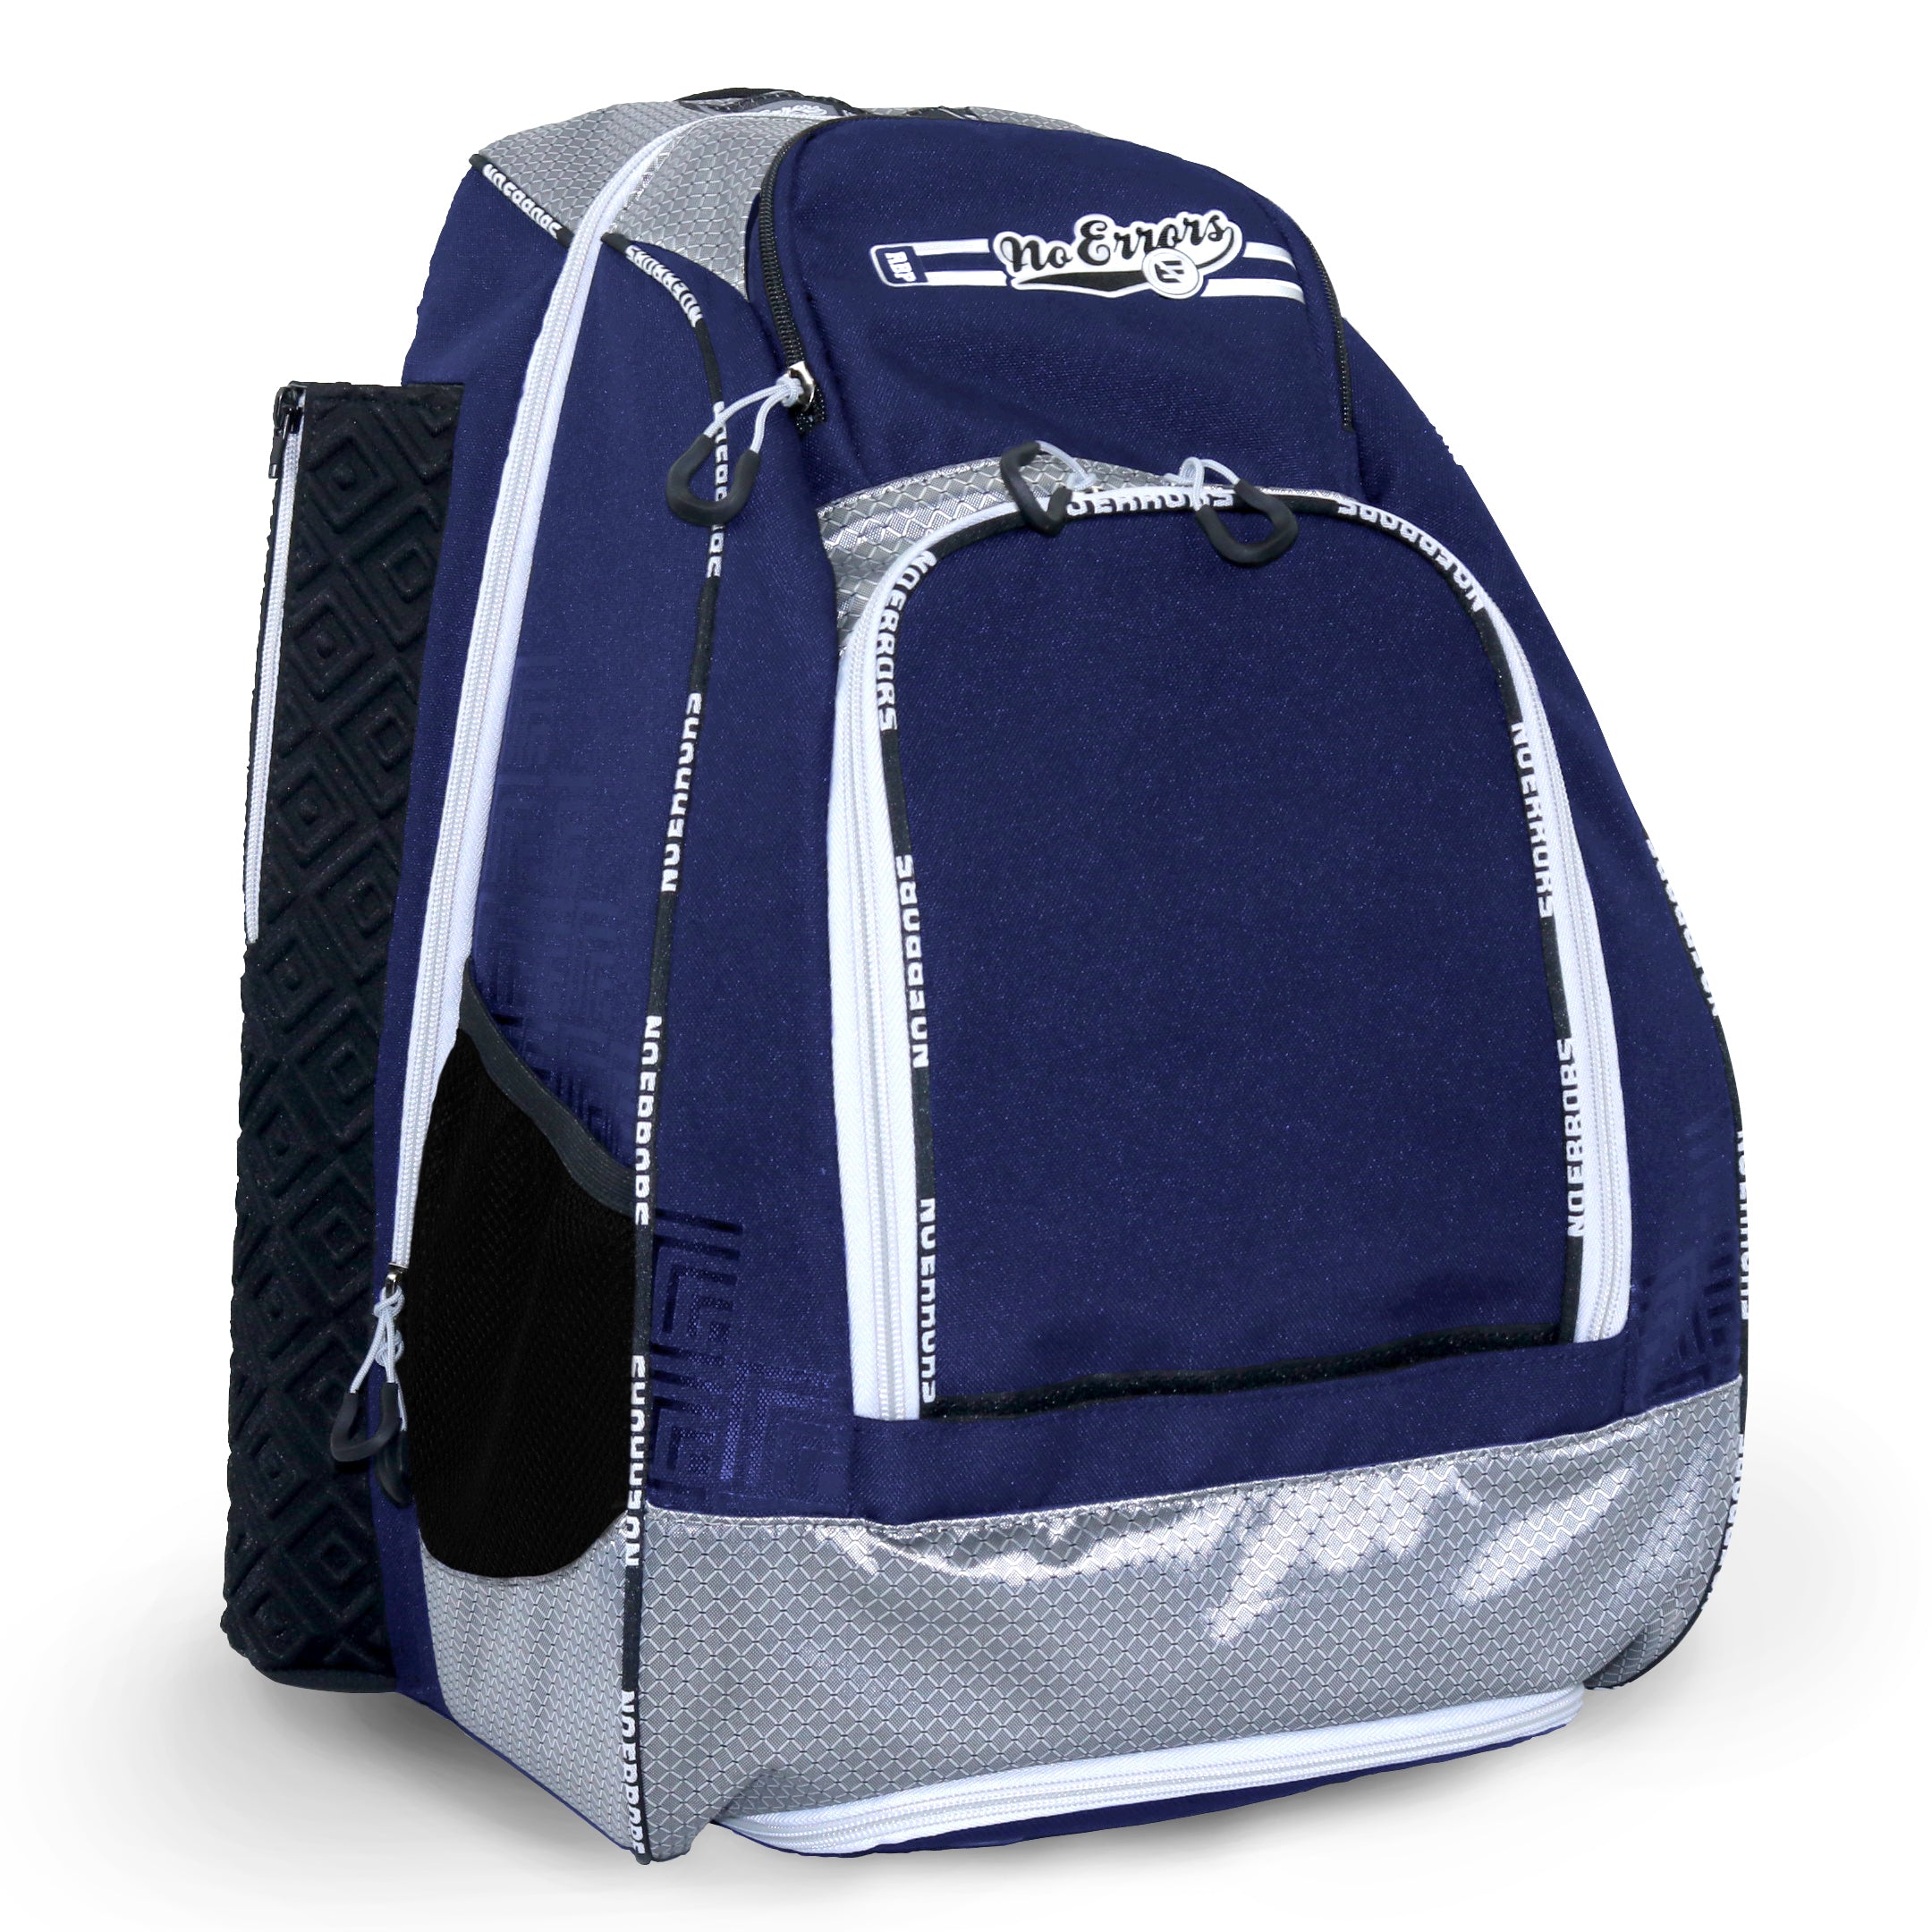 RBP Backpack Bag